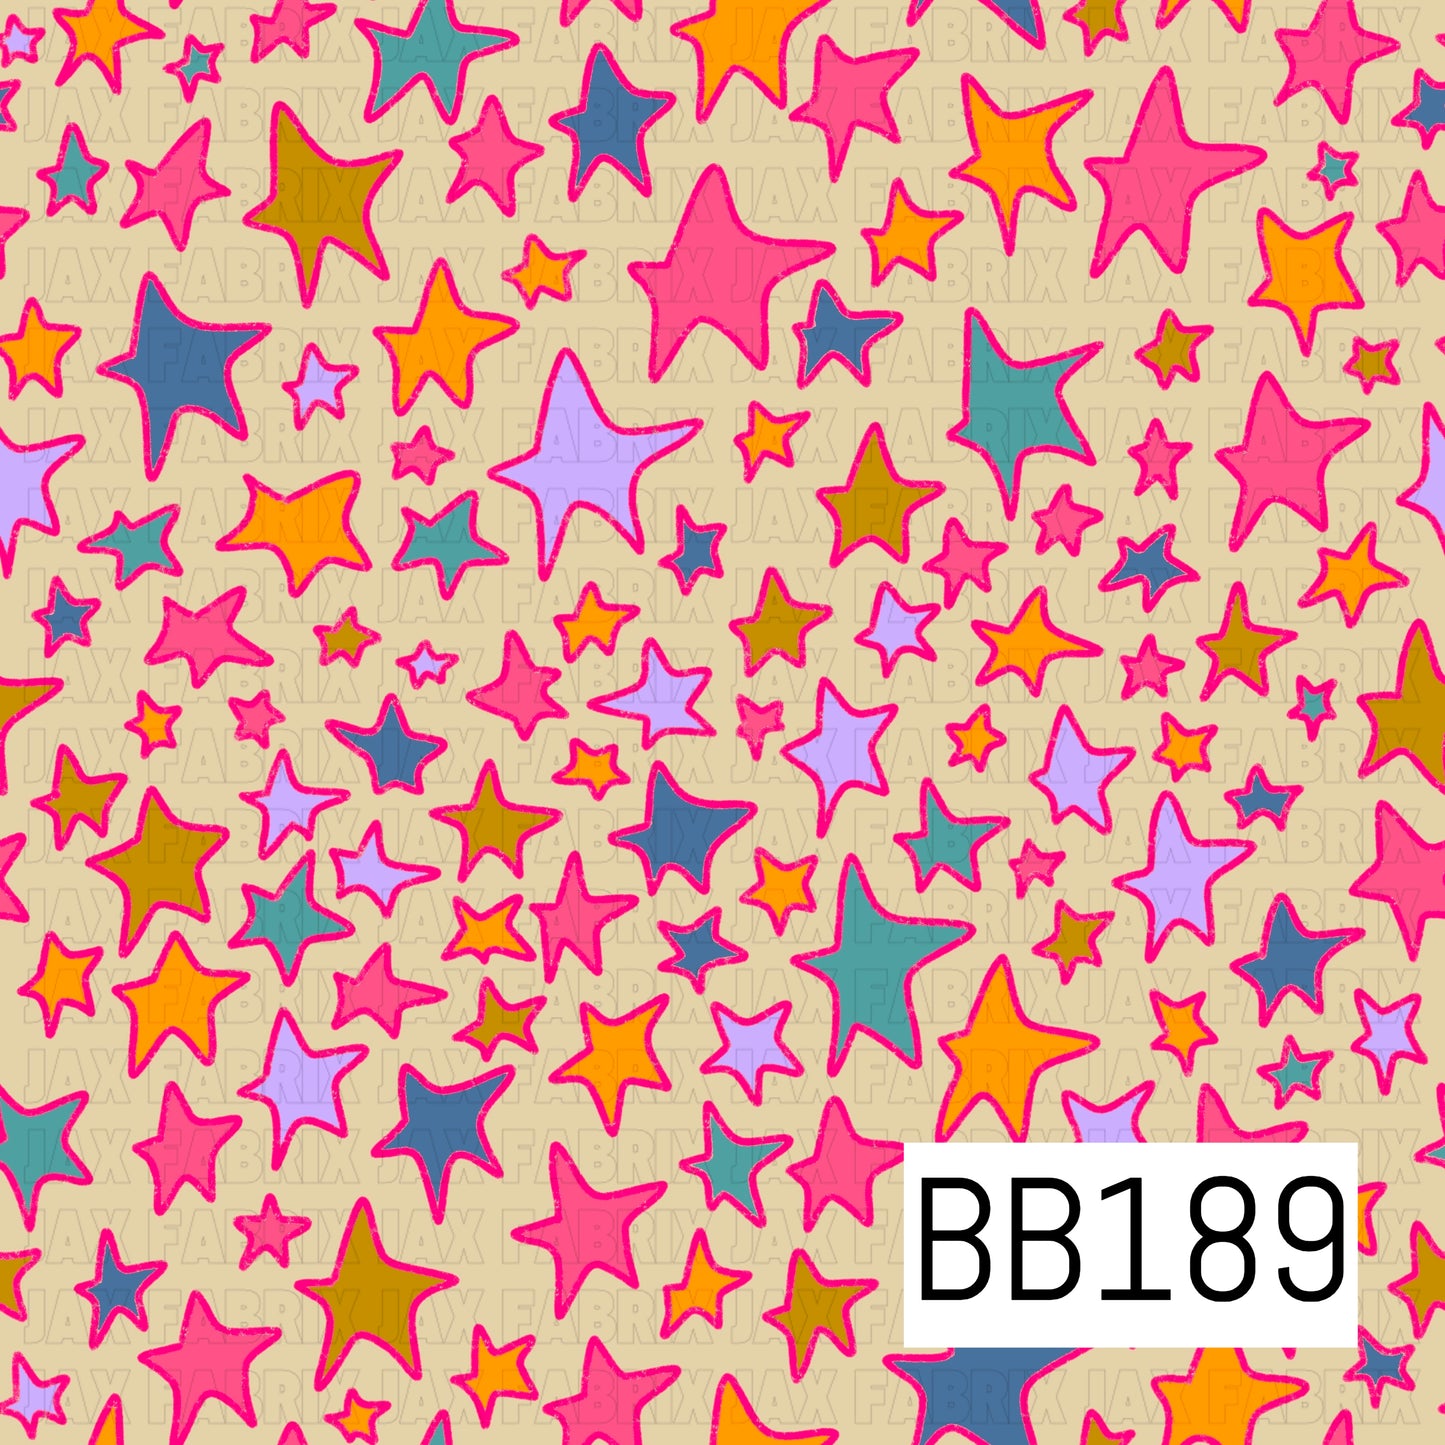 BB189